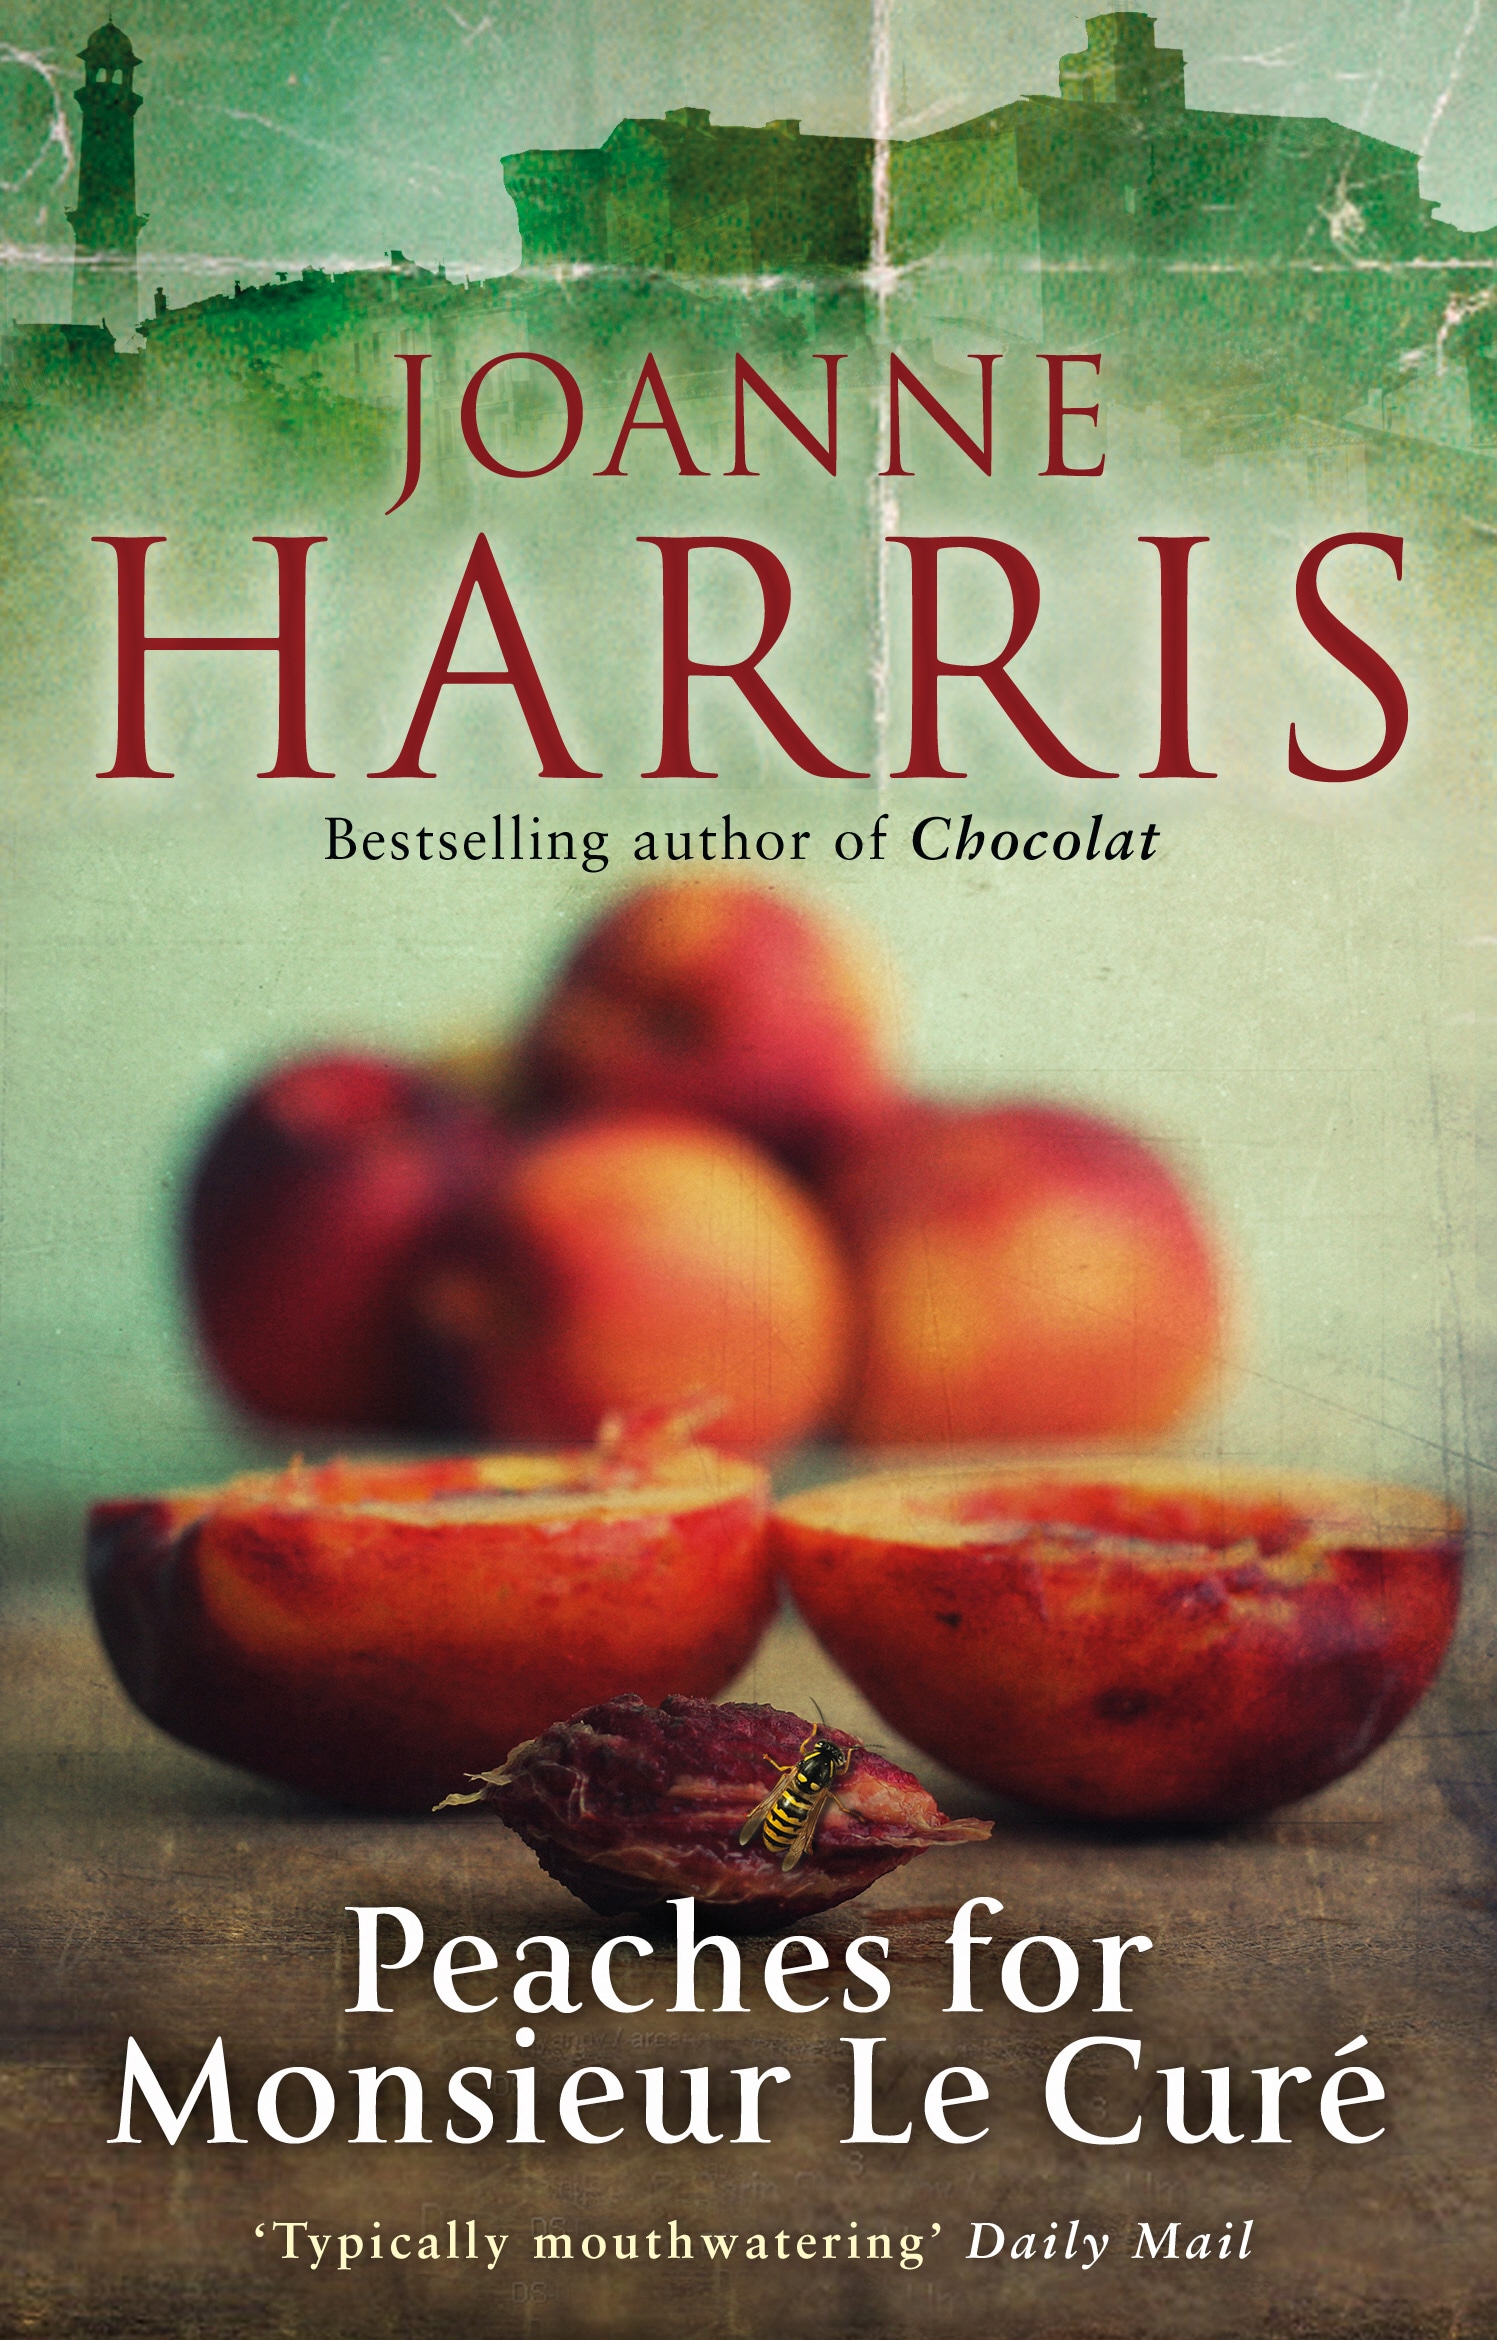 Book “Peaches for Monsieur le Curé (Chocolat 3)” by Joanne Harris — March 28, 2013